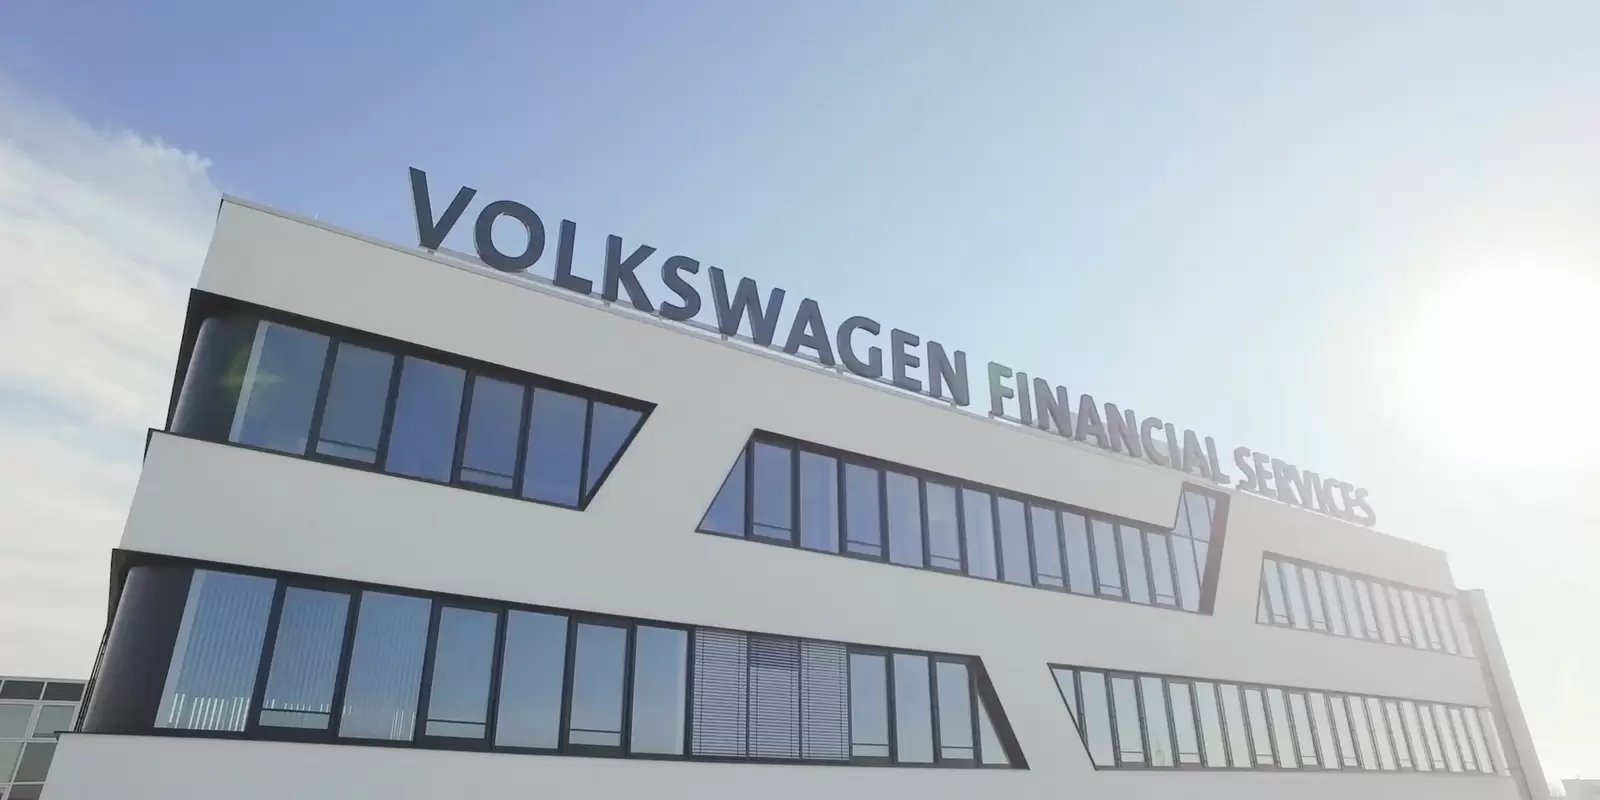 Volkswagen Financial Services Building